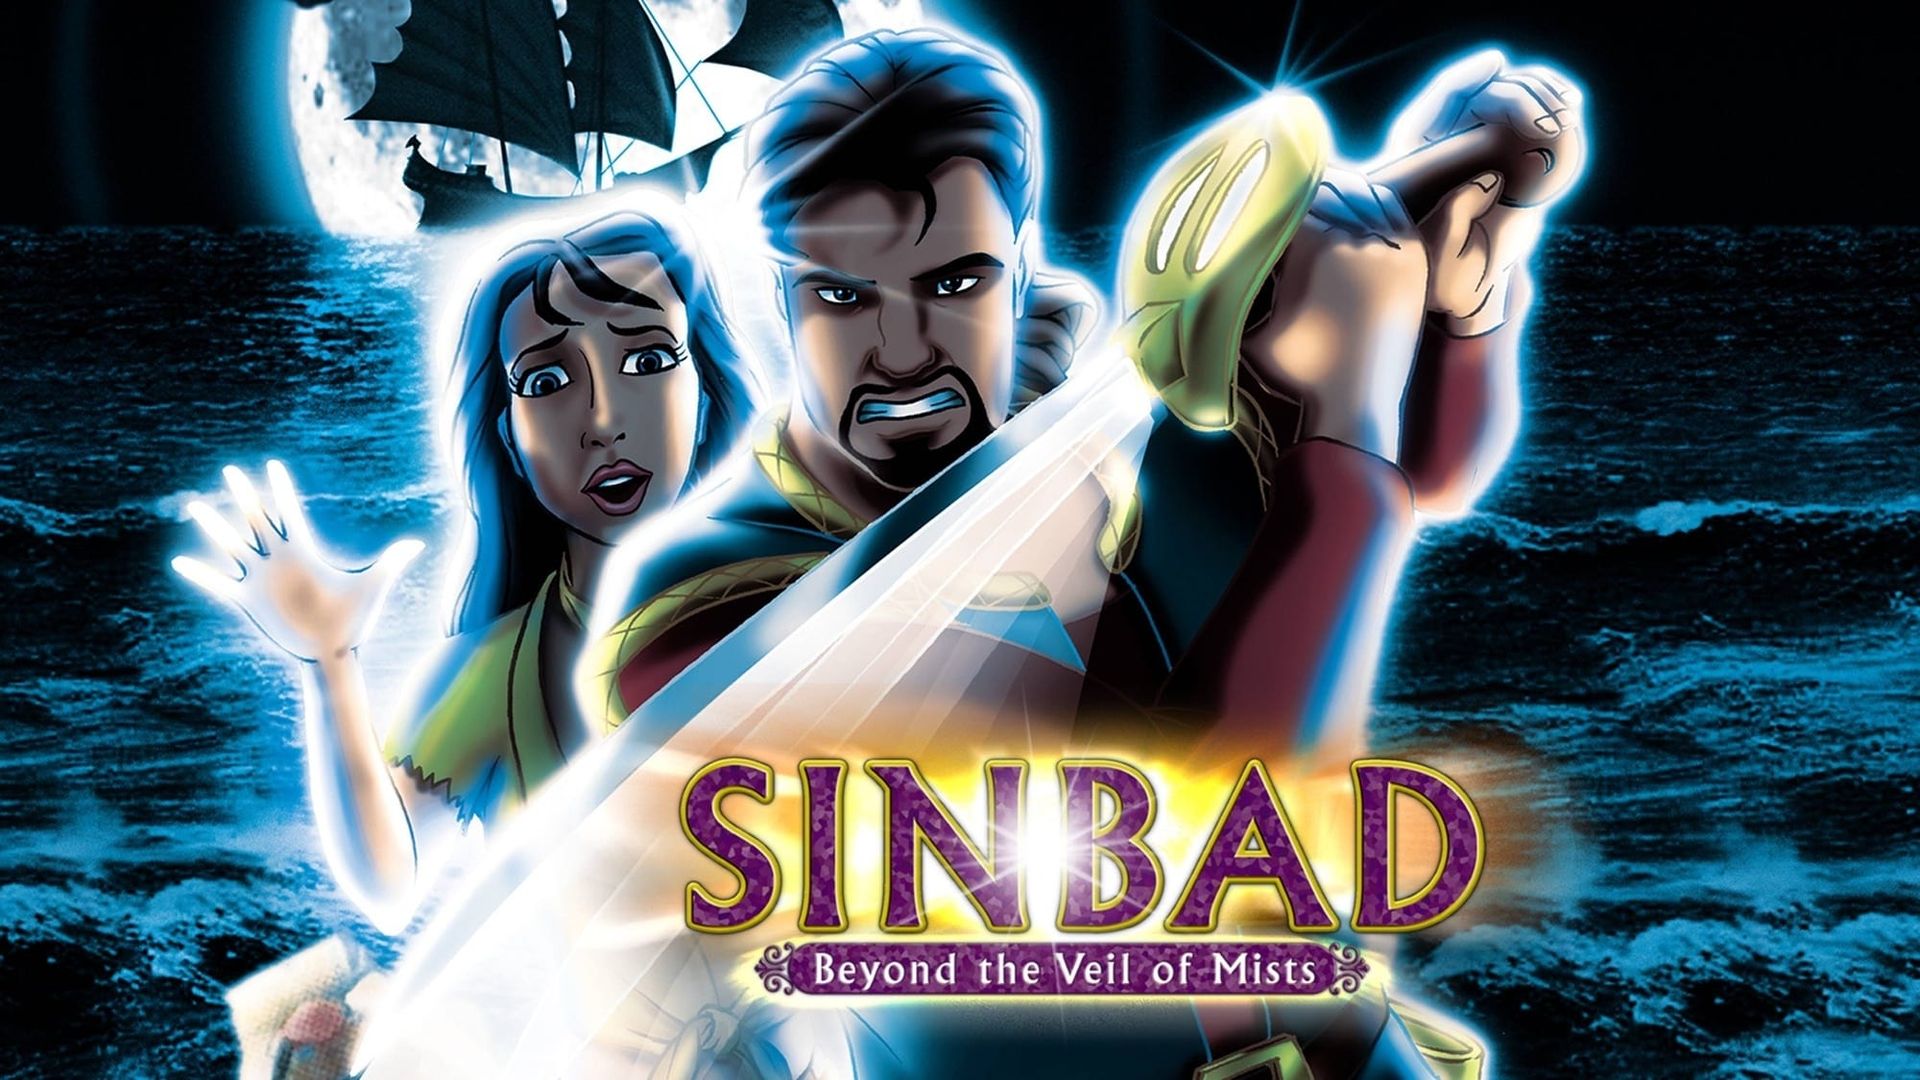 Sinbad: Beyond the Veil of Mists background